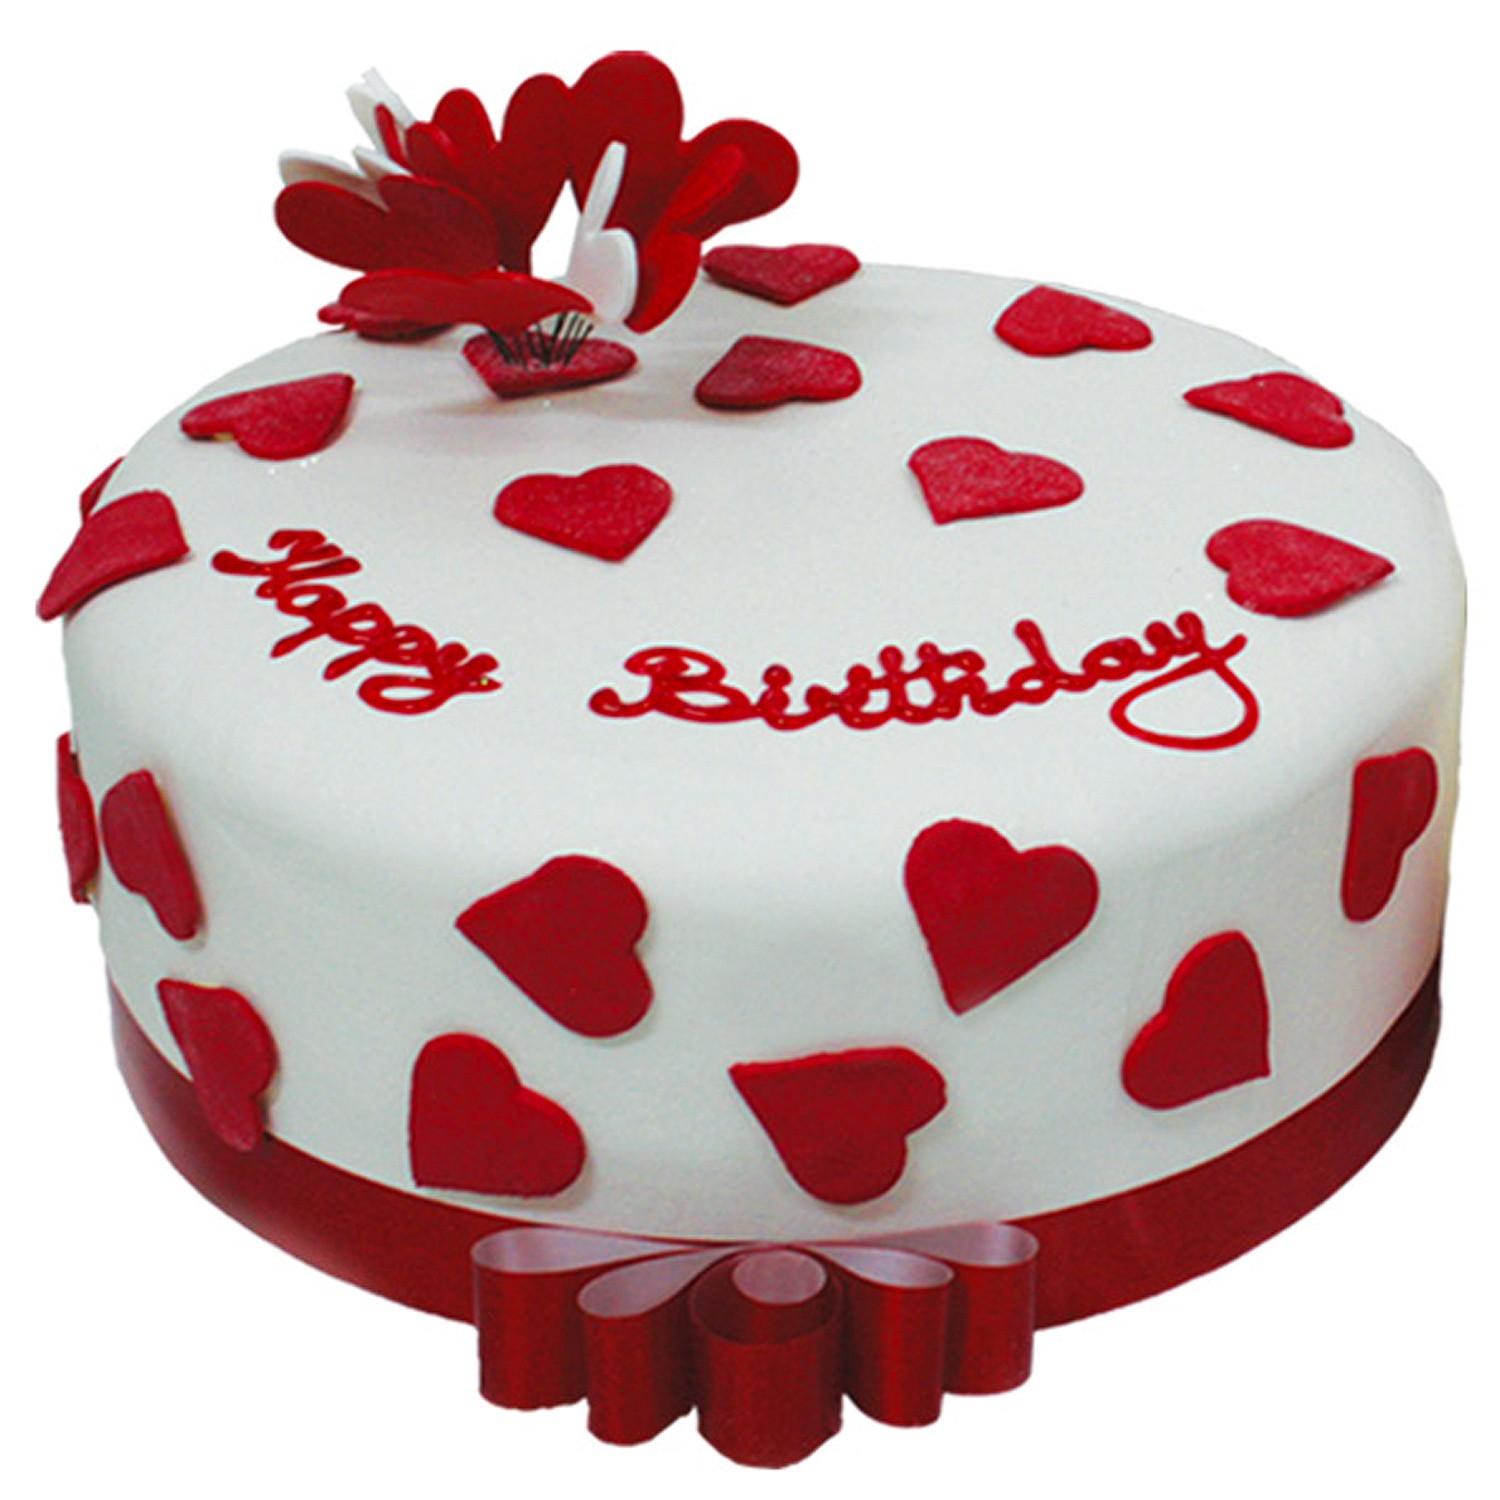 Free Birthday Cake Photo, Download Free Clip Art, Free Clip